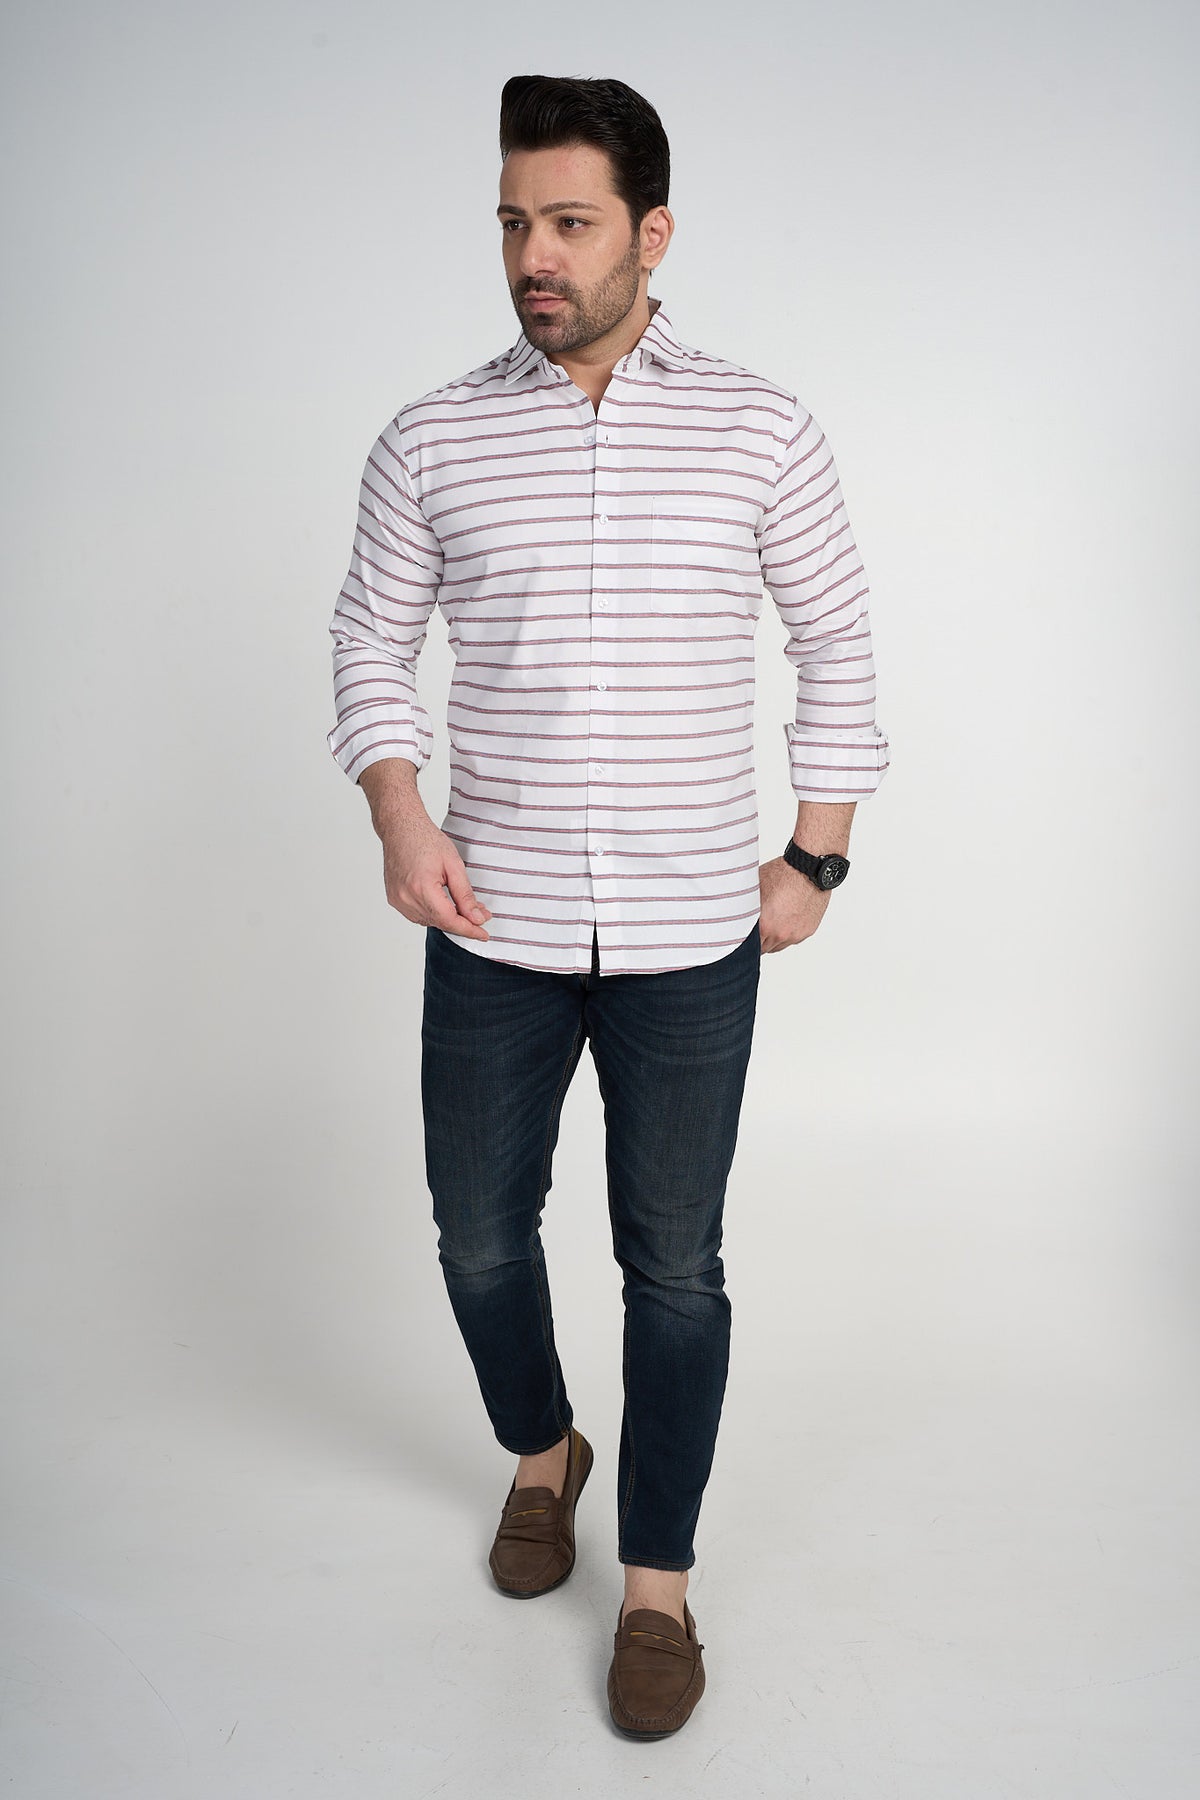 Trafford - Stripe Shirt